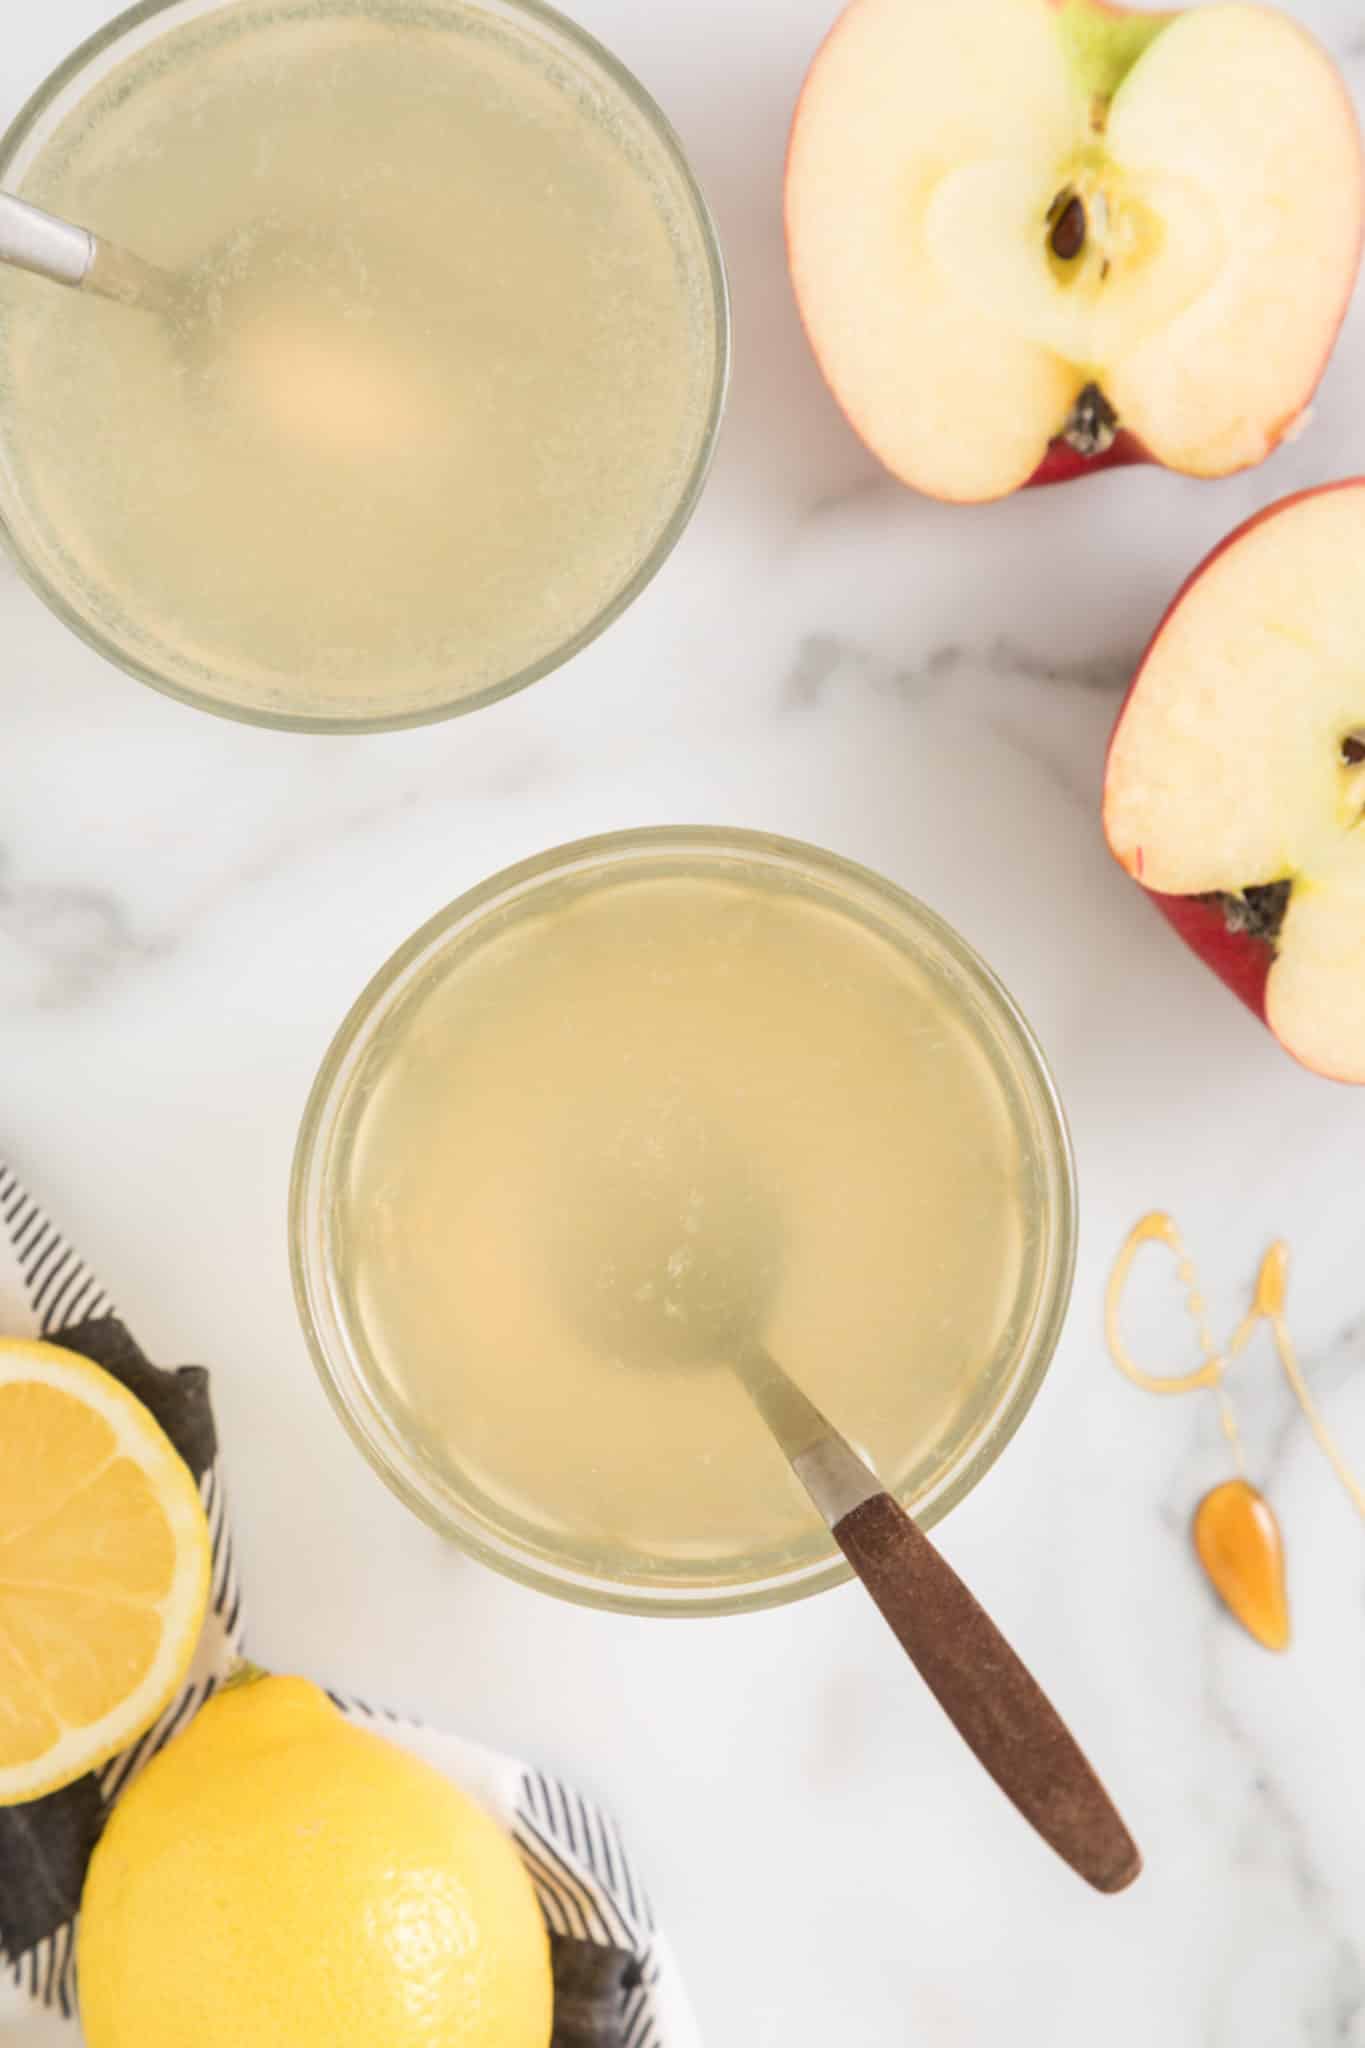 Spoons in glasses of apple cider vinegar drink.